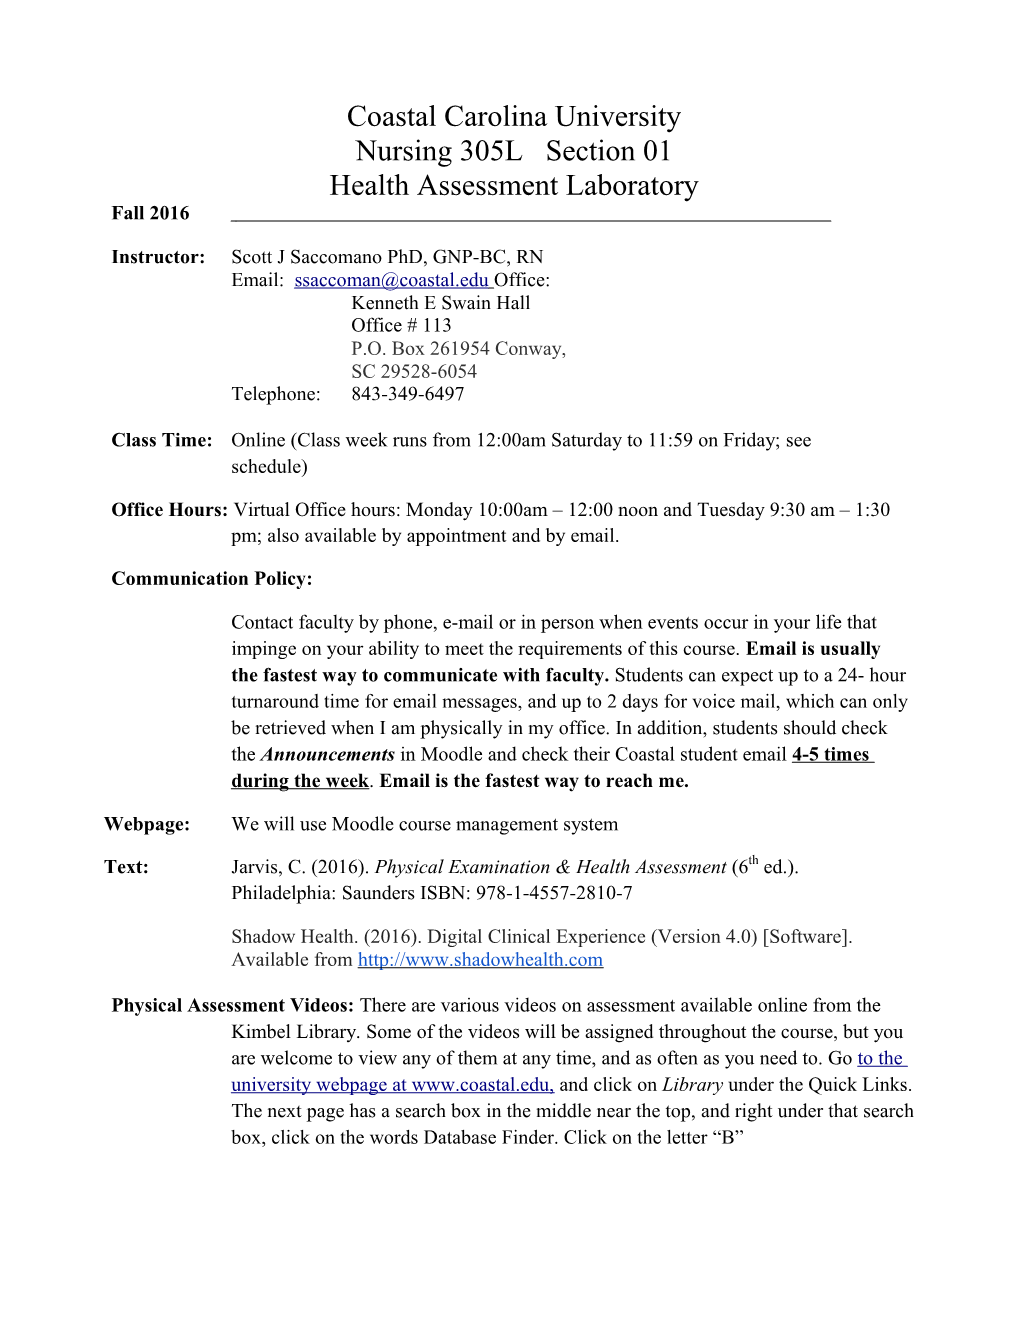 Coastal Carolina University Nursing 305Lsection 01 Health Assessment Laboratory